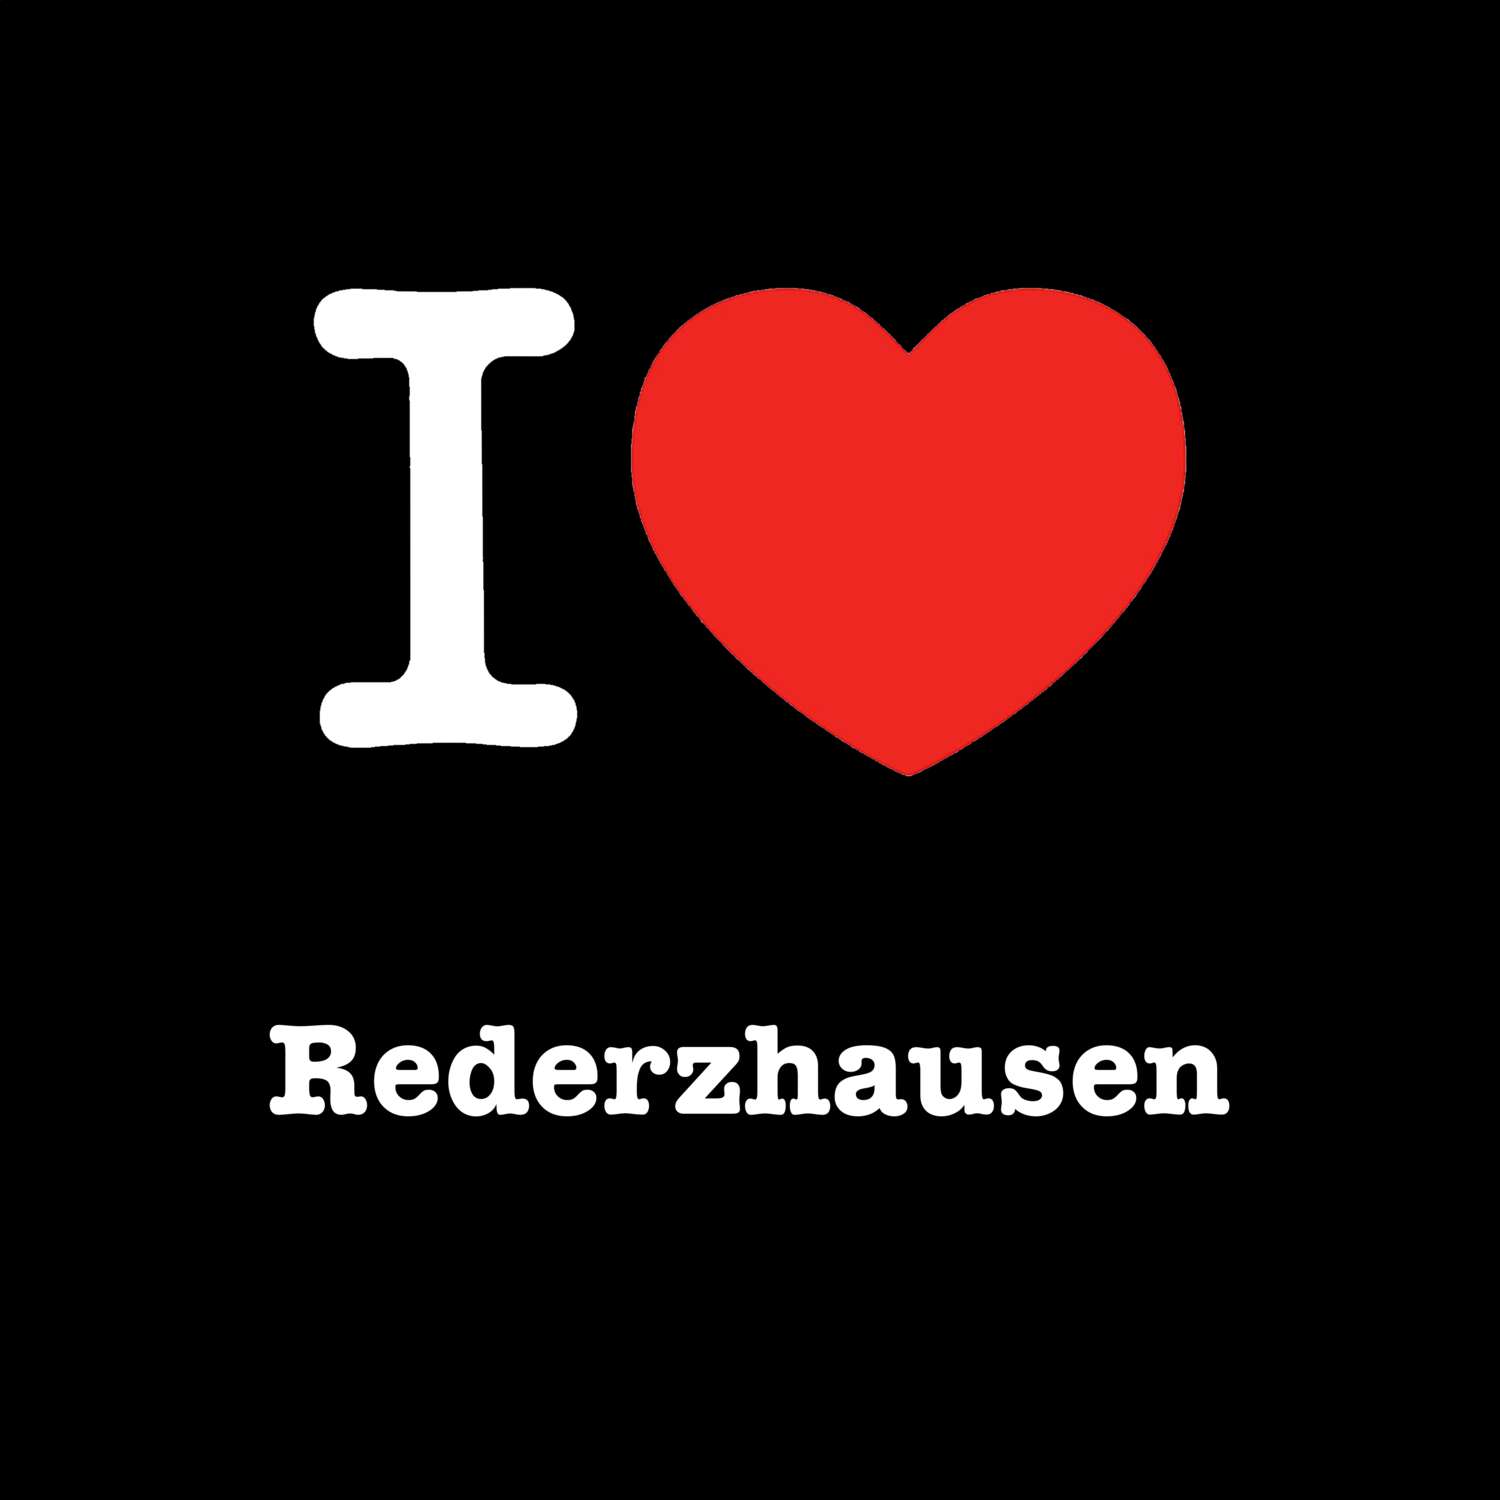 Rederzhausen T-Shirt »I love«